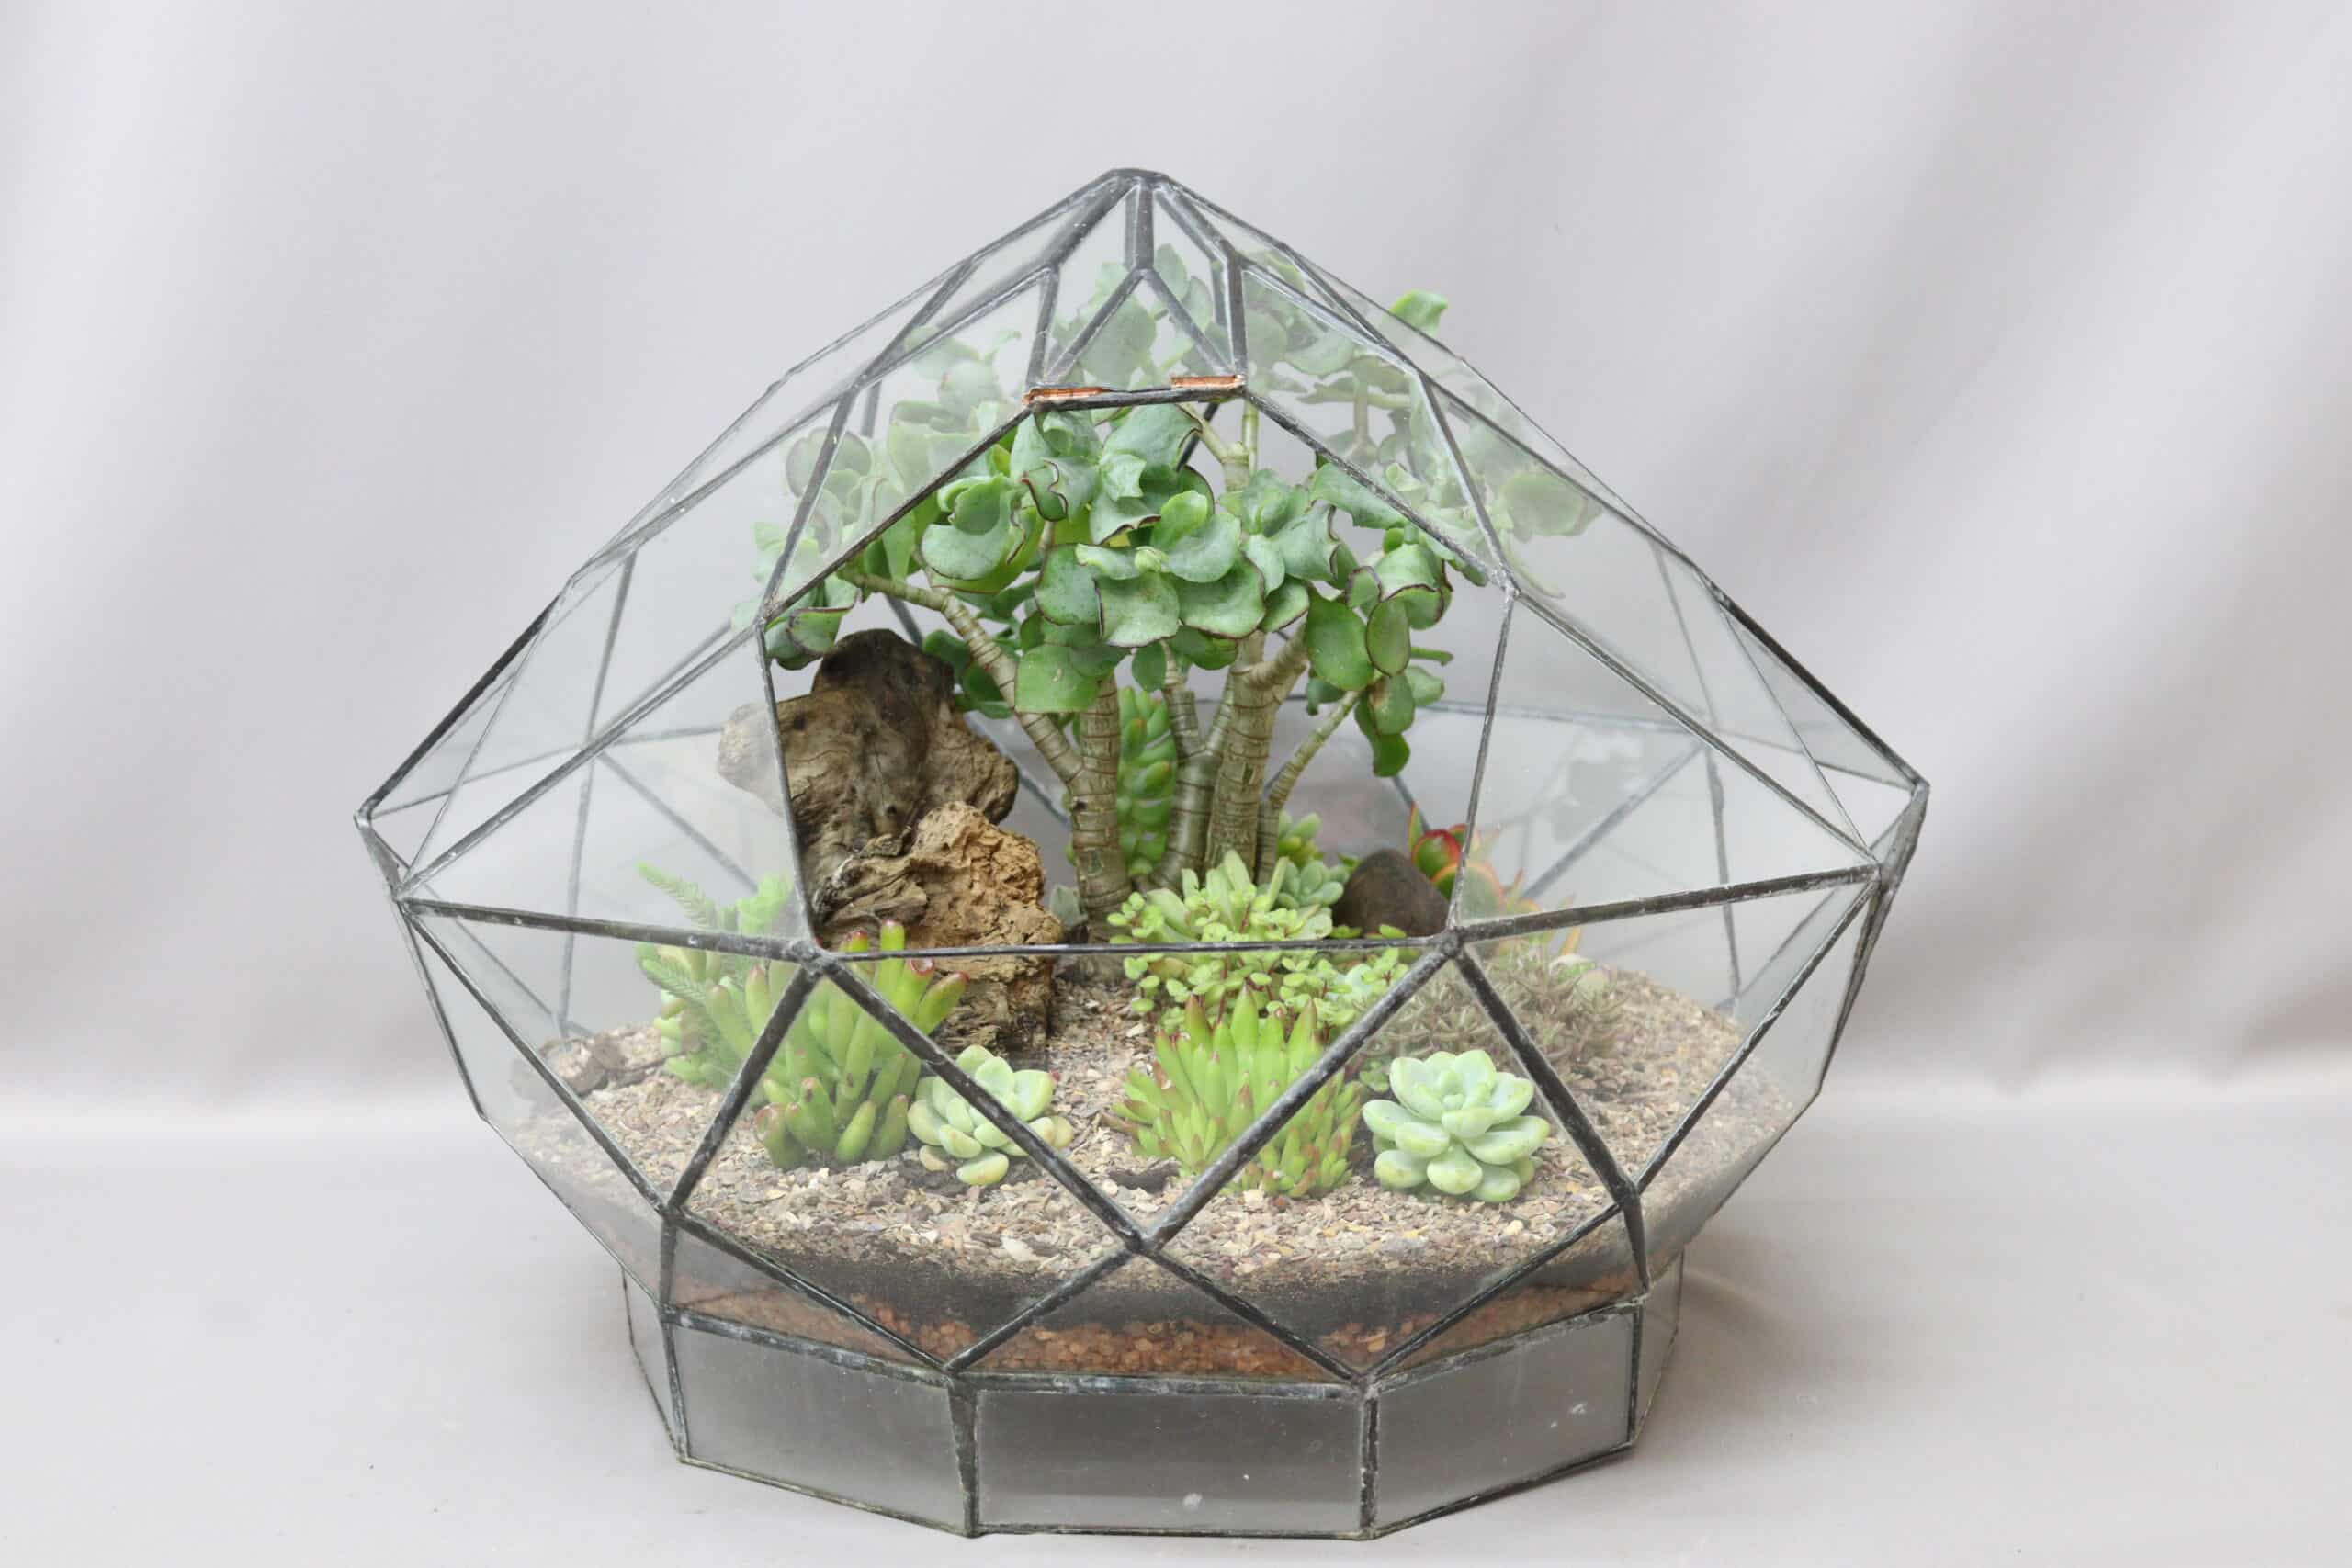 A diamond-shaped glass terrarium planter with an assortment of succulents inside, against a plain grey background.